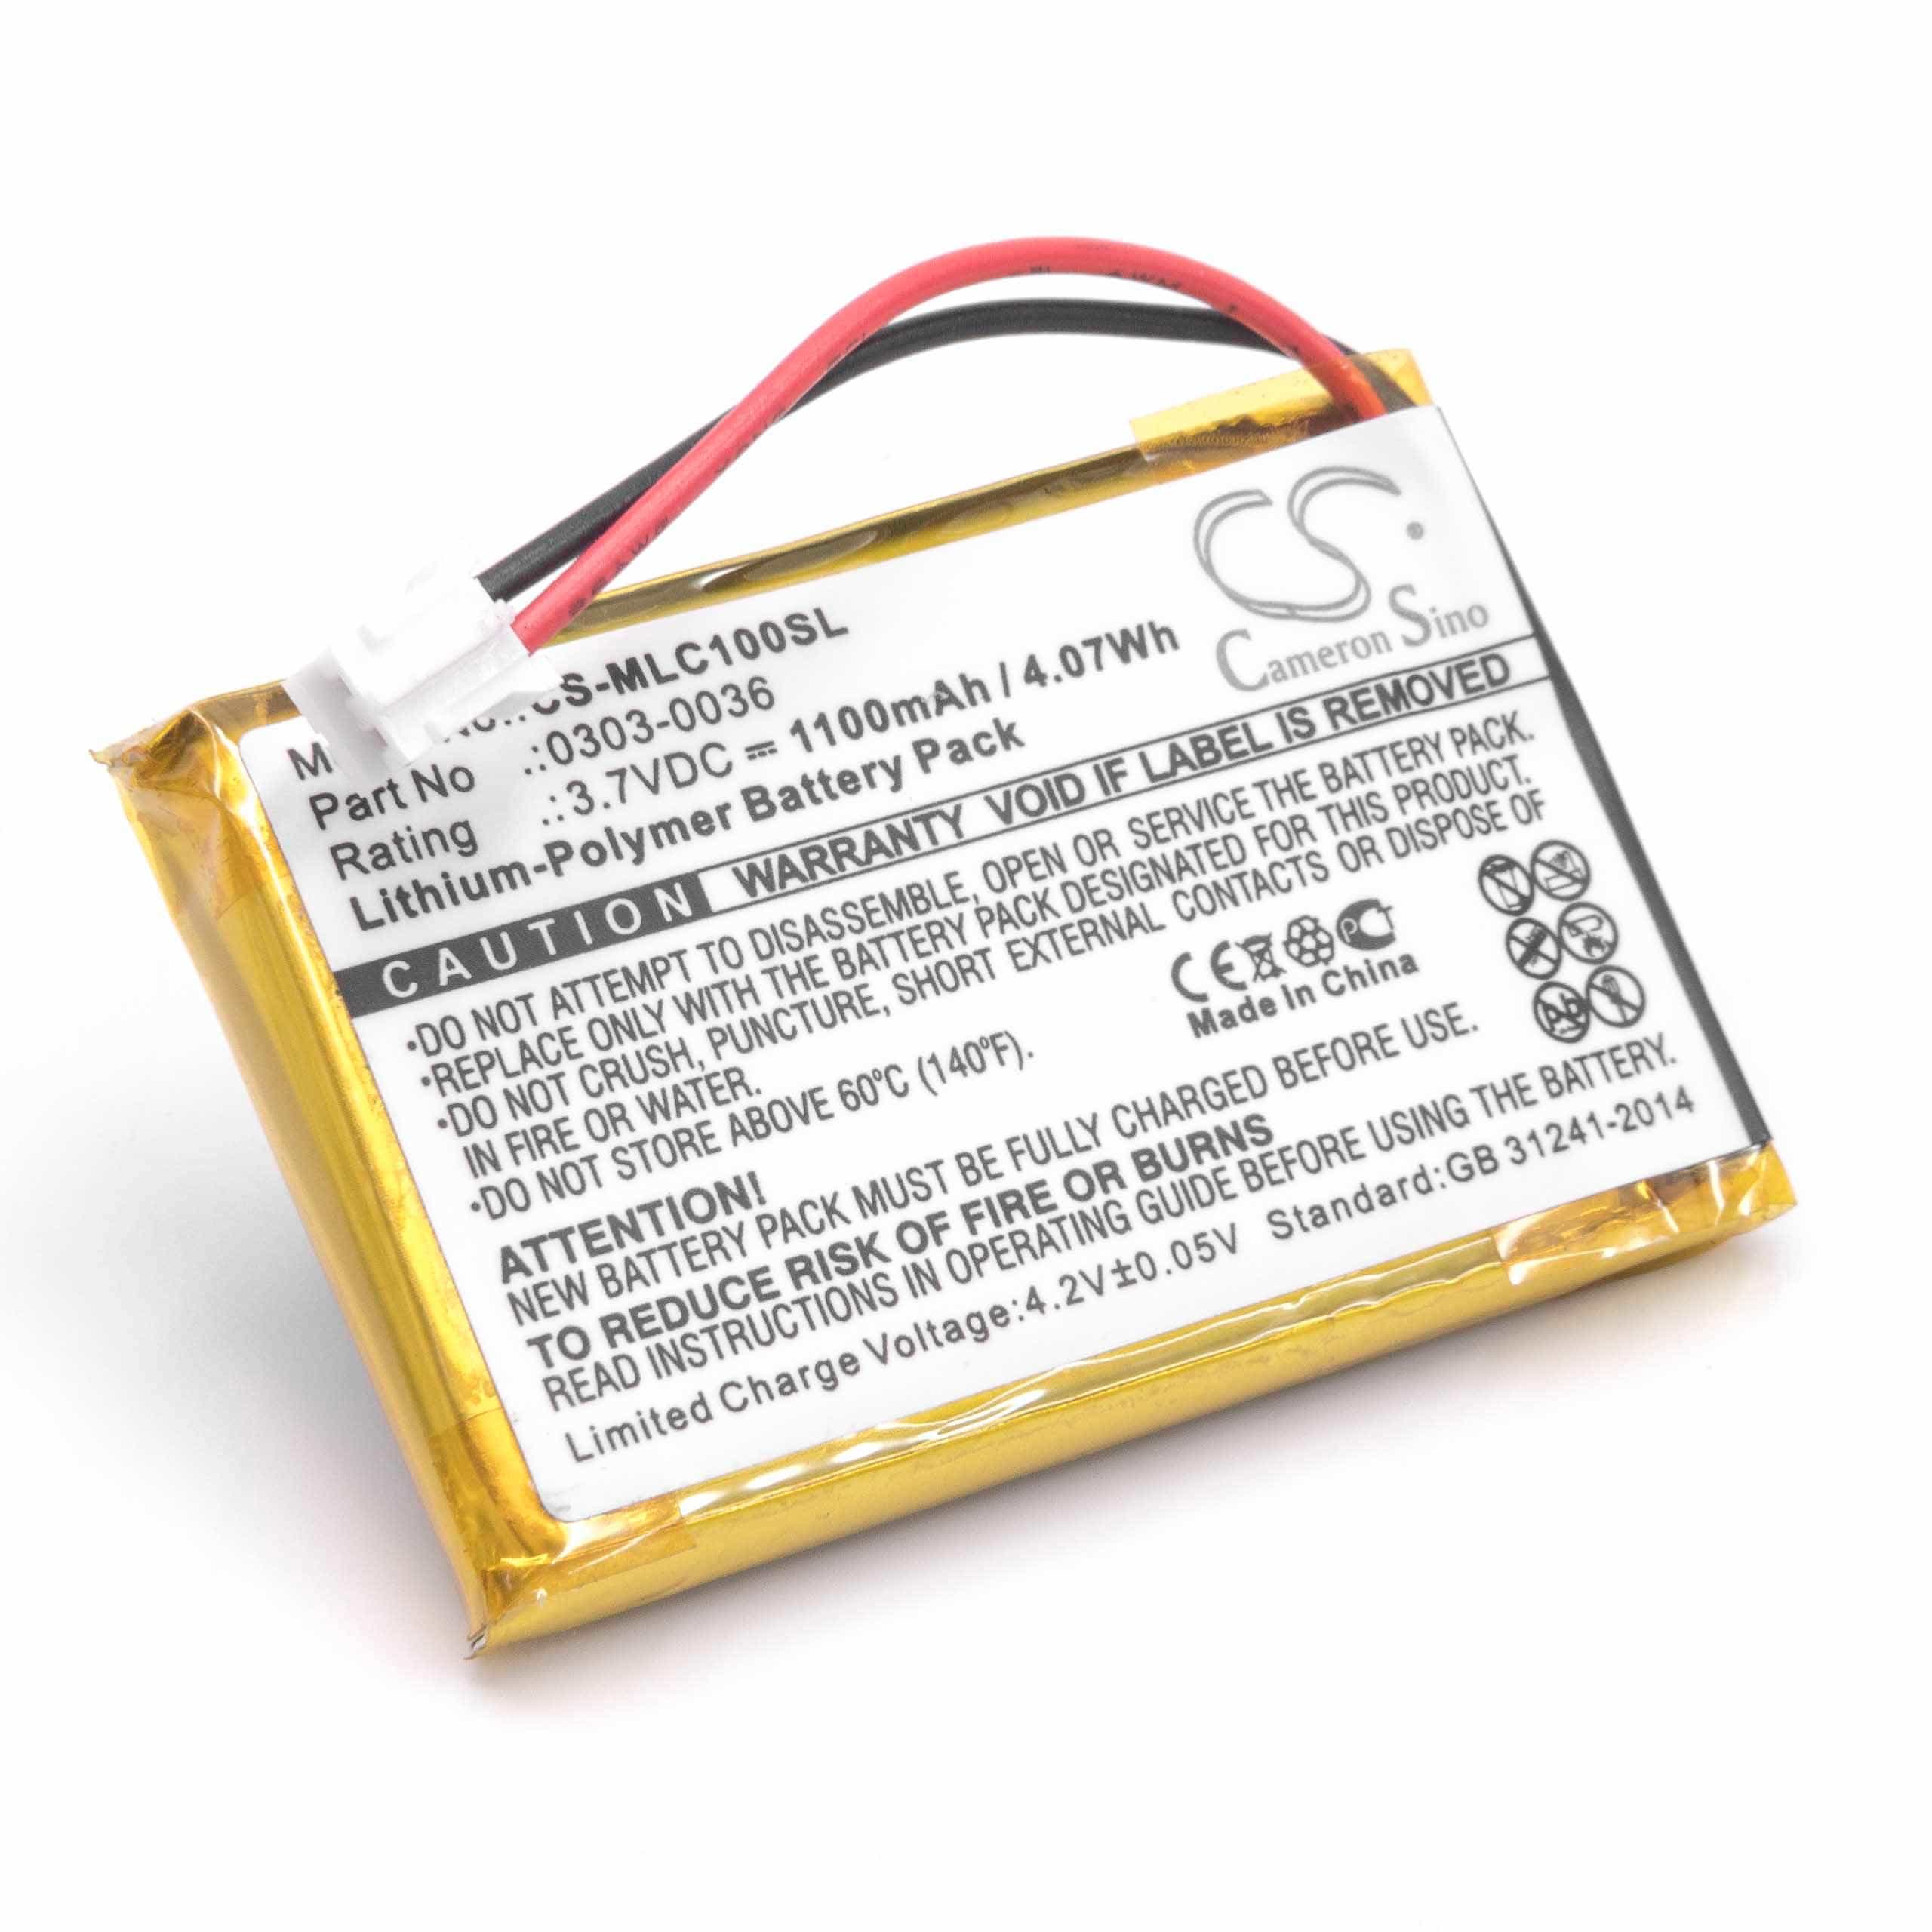 Batería reemplaza Minelab 0303-0036 para dispositivo medición Minelab - 1100 mAh 3,7 V Li-poli